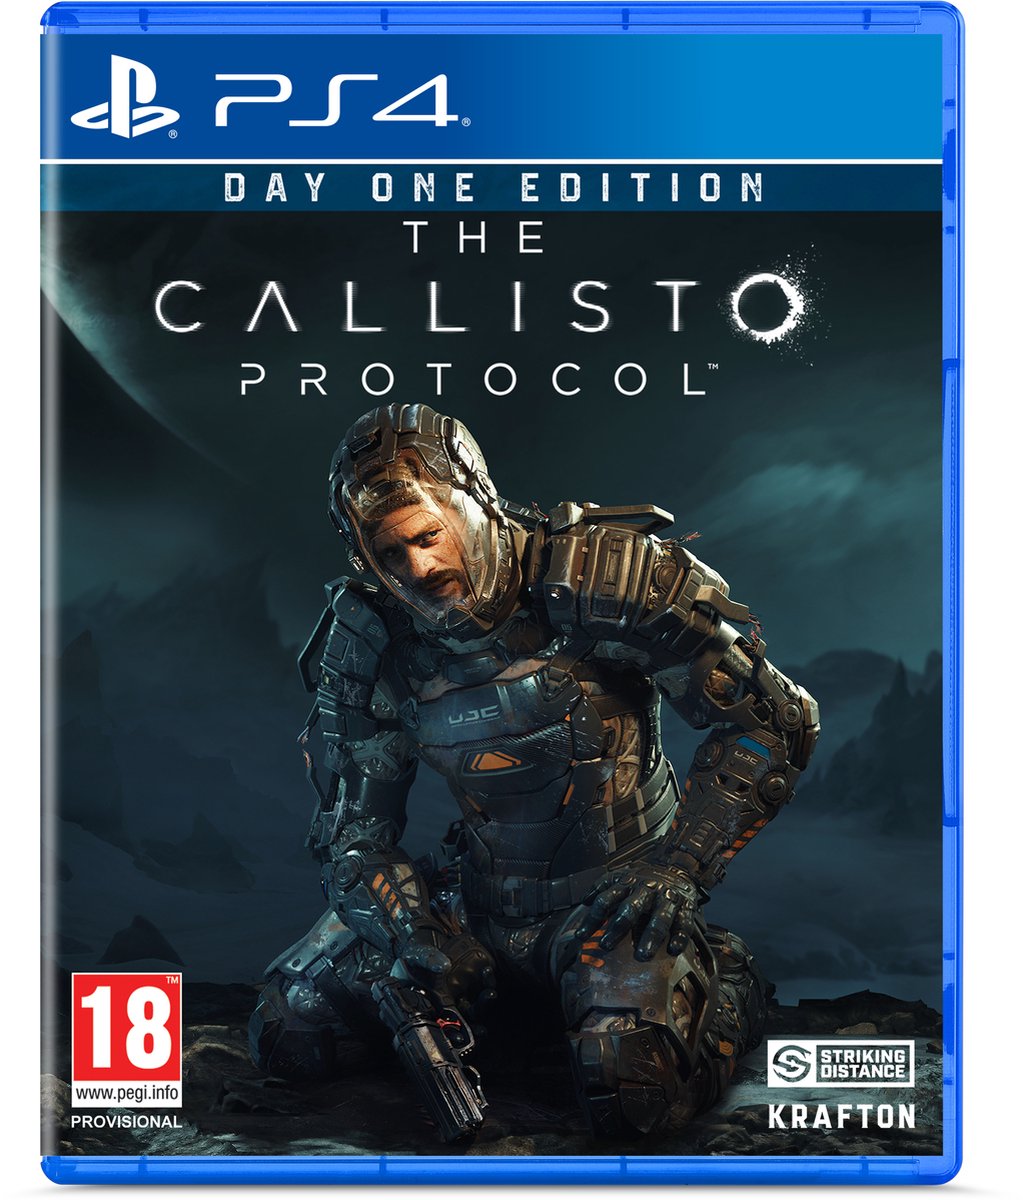 The Callisto Protocol - Day One Edition (PS4), Krafton, Striking Distance Studios